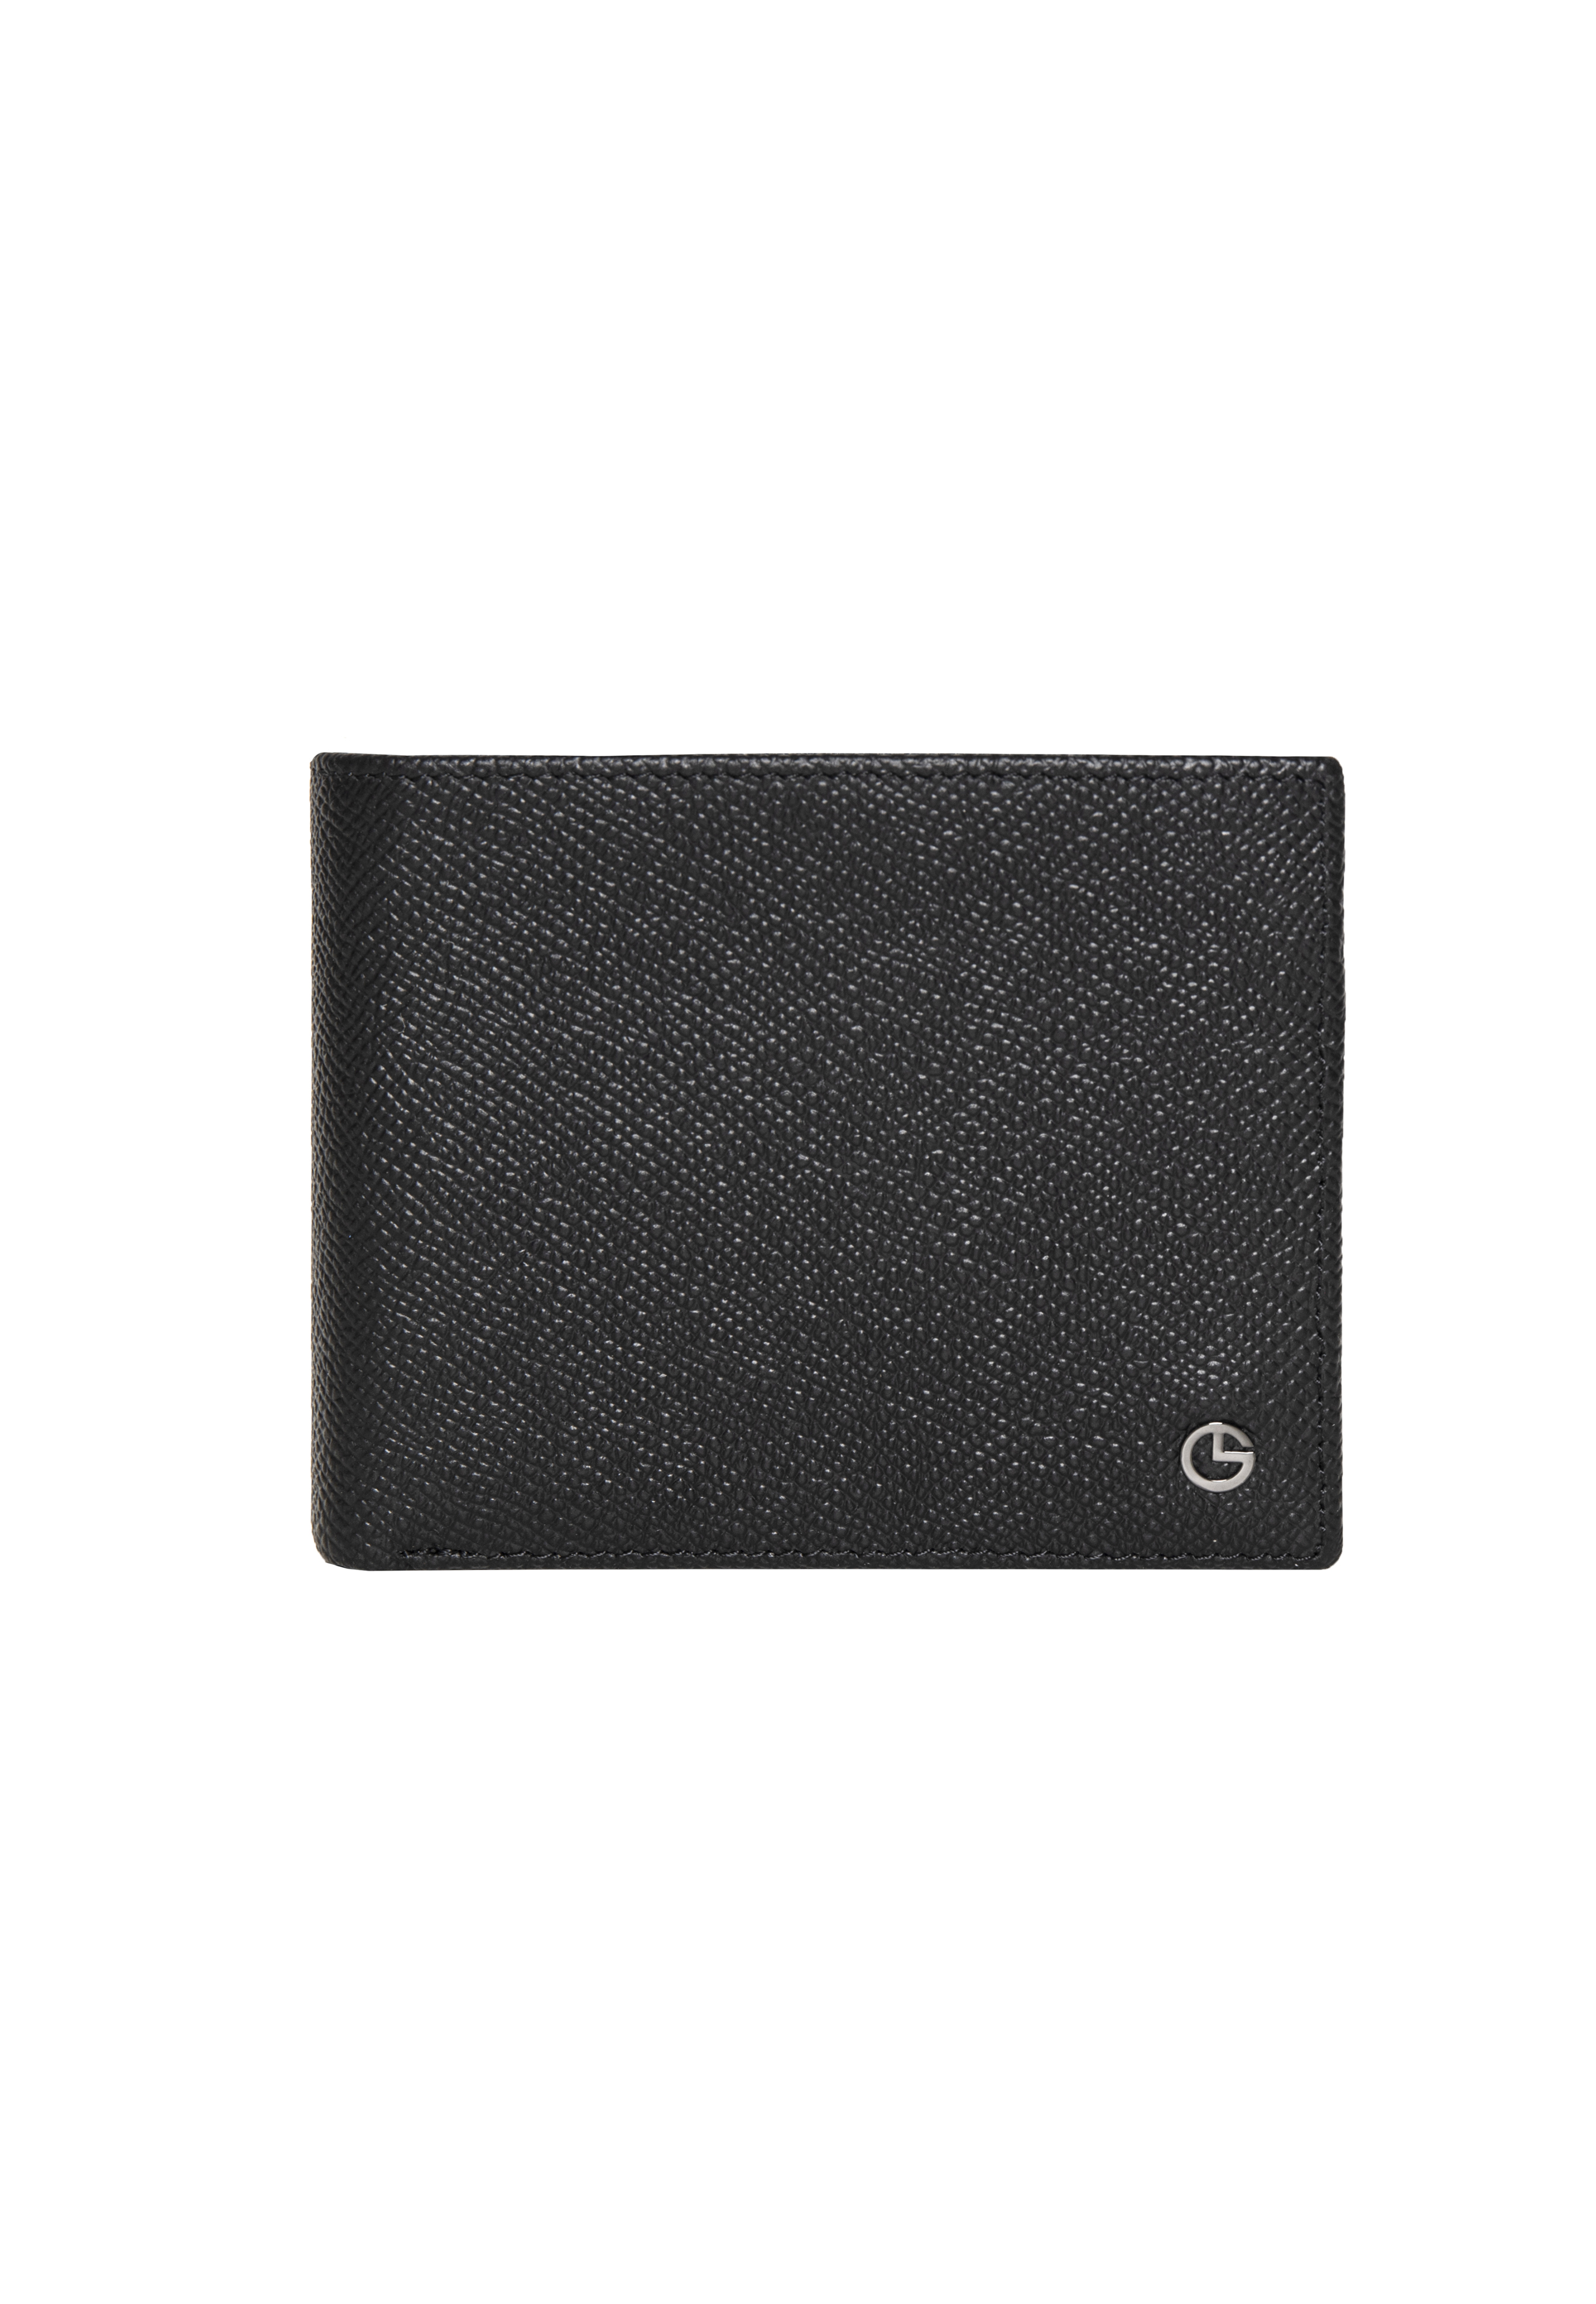 [Online Exclusive] Goldlion Men Genuine Leather Wallet (6 Cards Slot, Window Compartment)